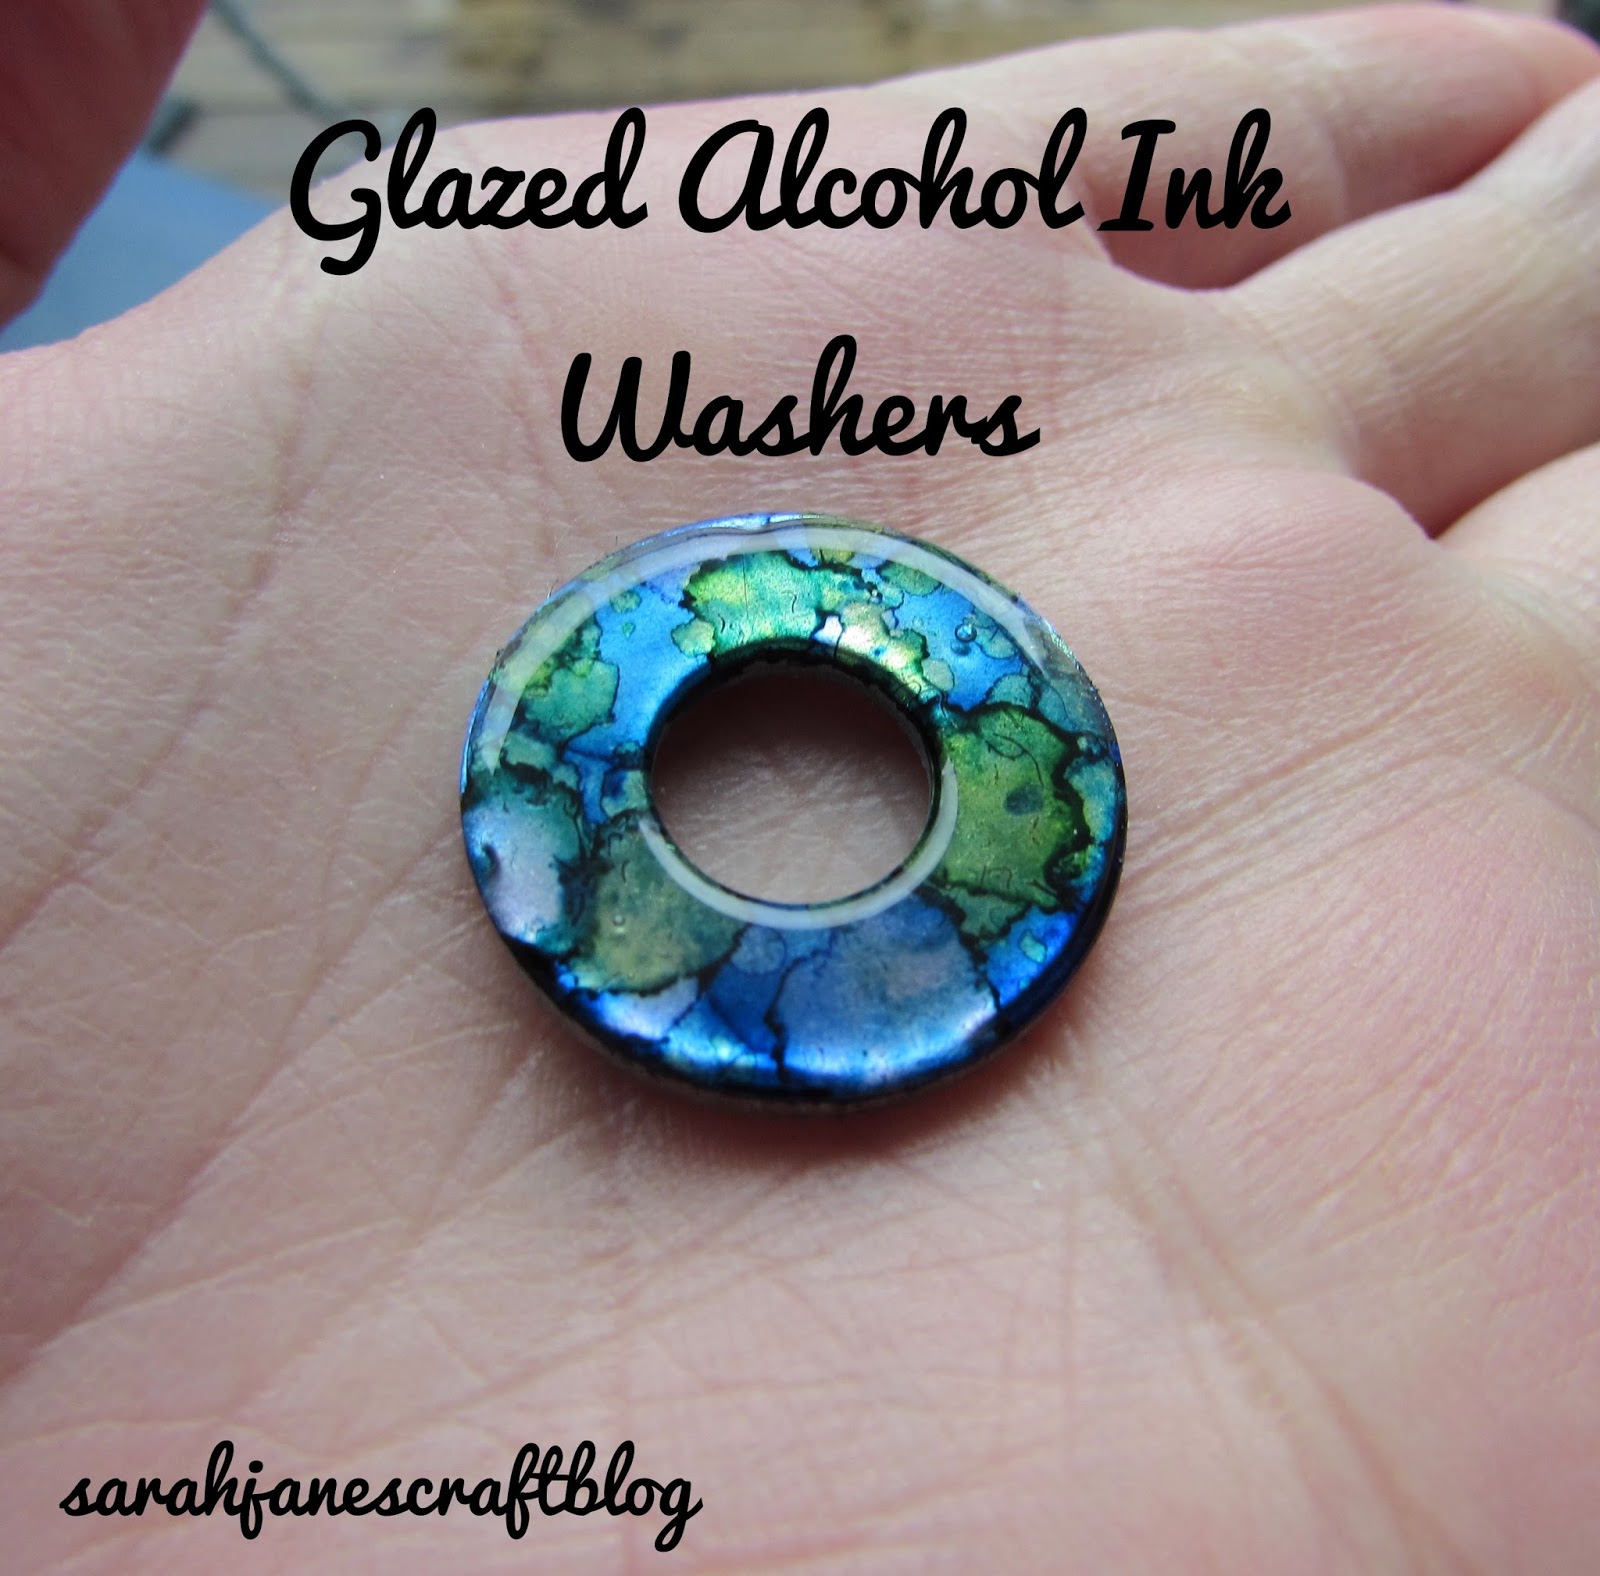 More Glazed Alcohol Ink Washers